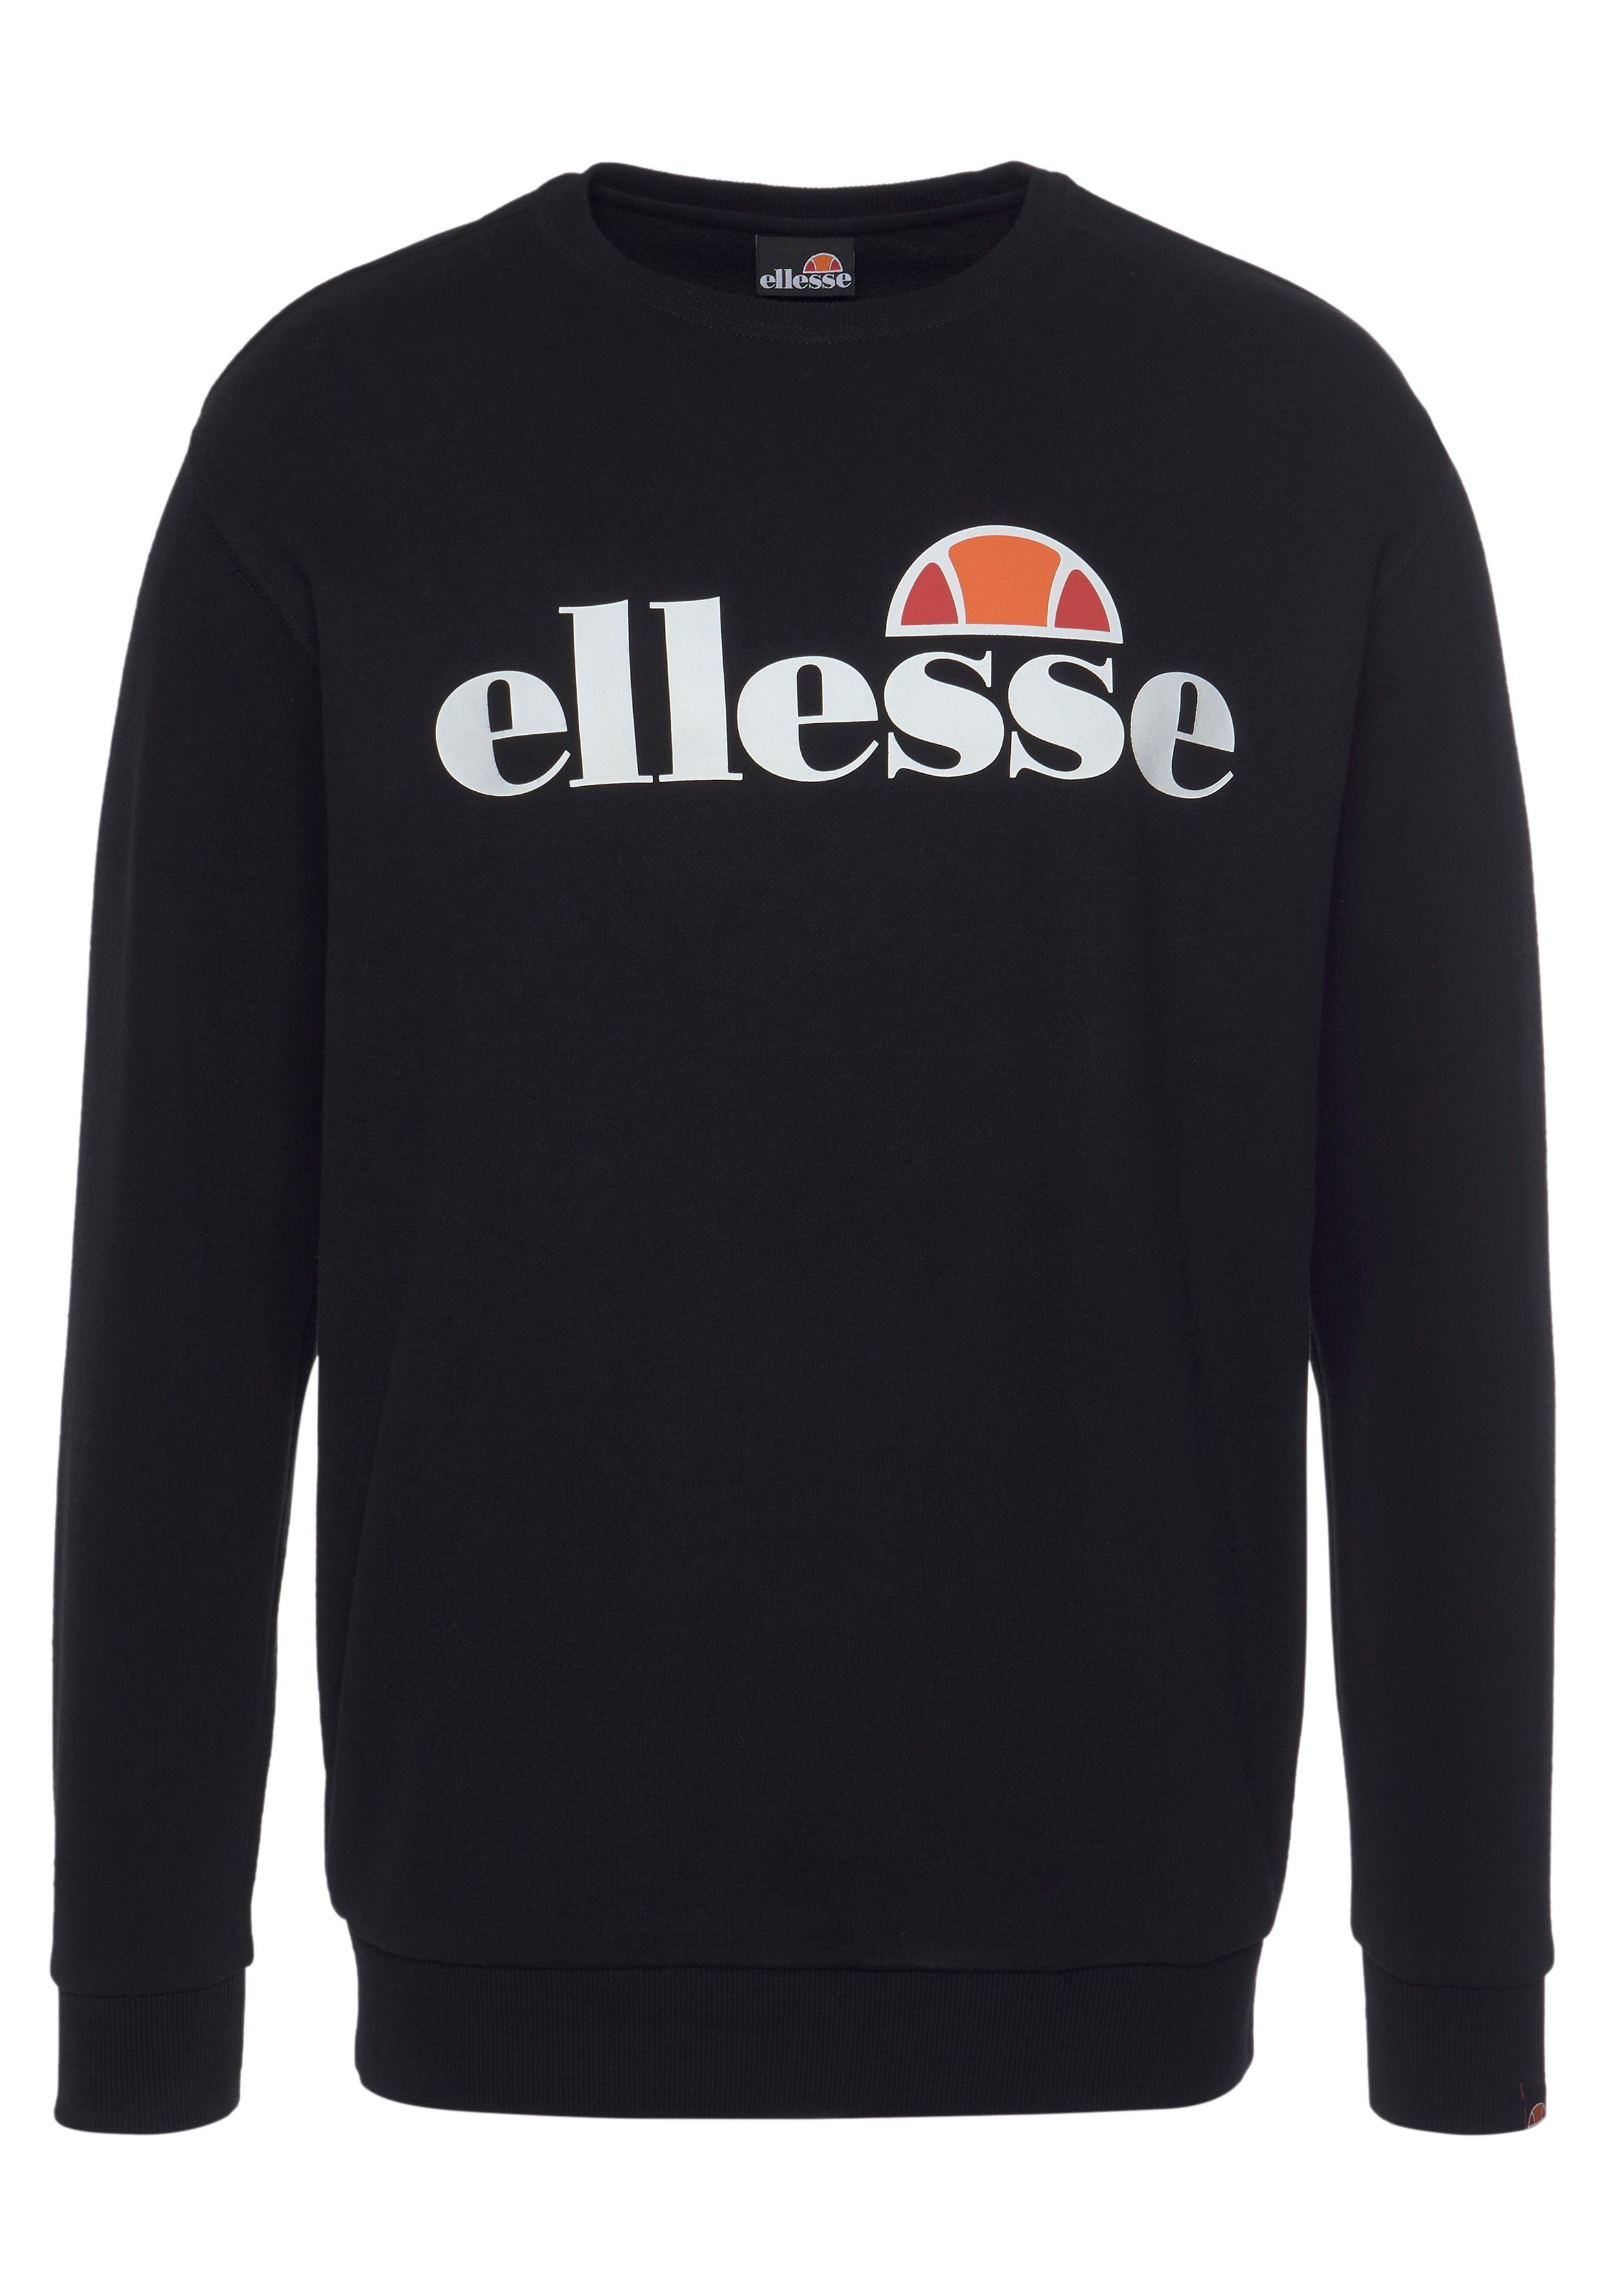 SL SUCCISO Ellesse SWEATSHIRT Sweatshirt schwarz